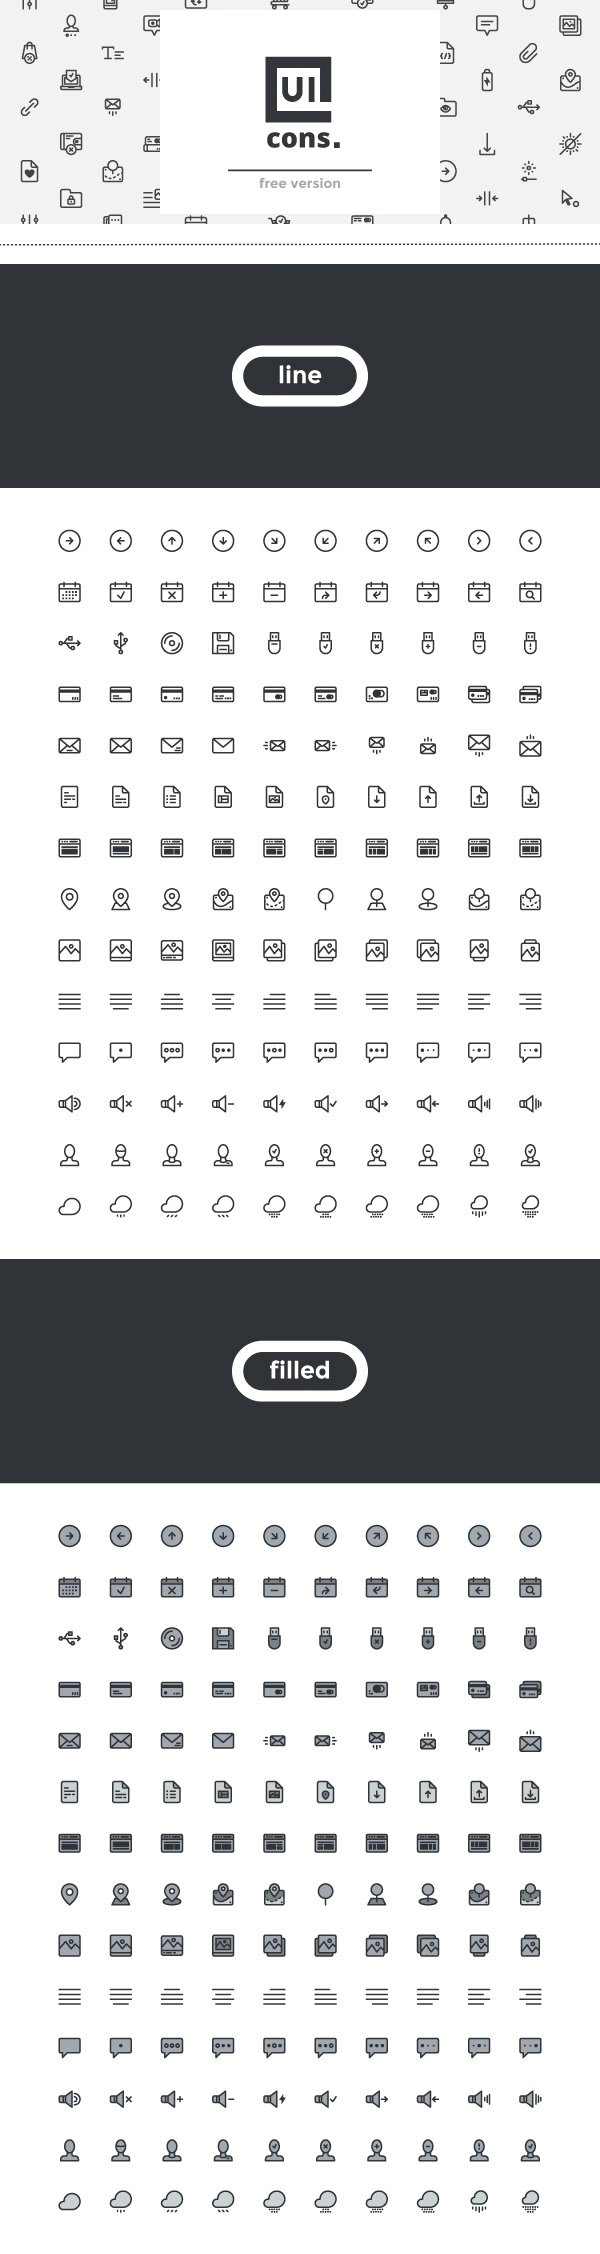 UIcons: 140 Free Icons